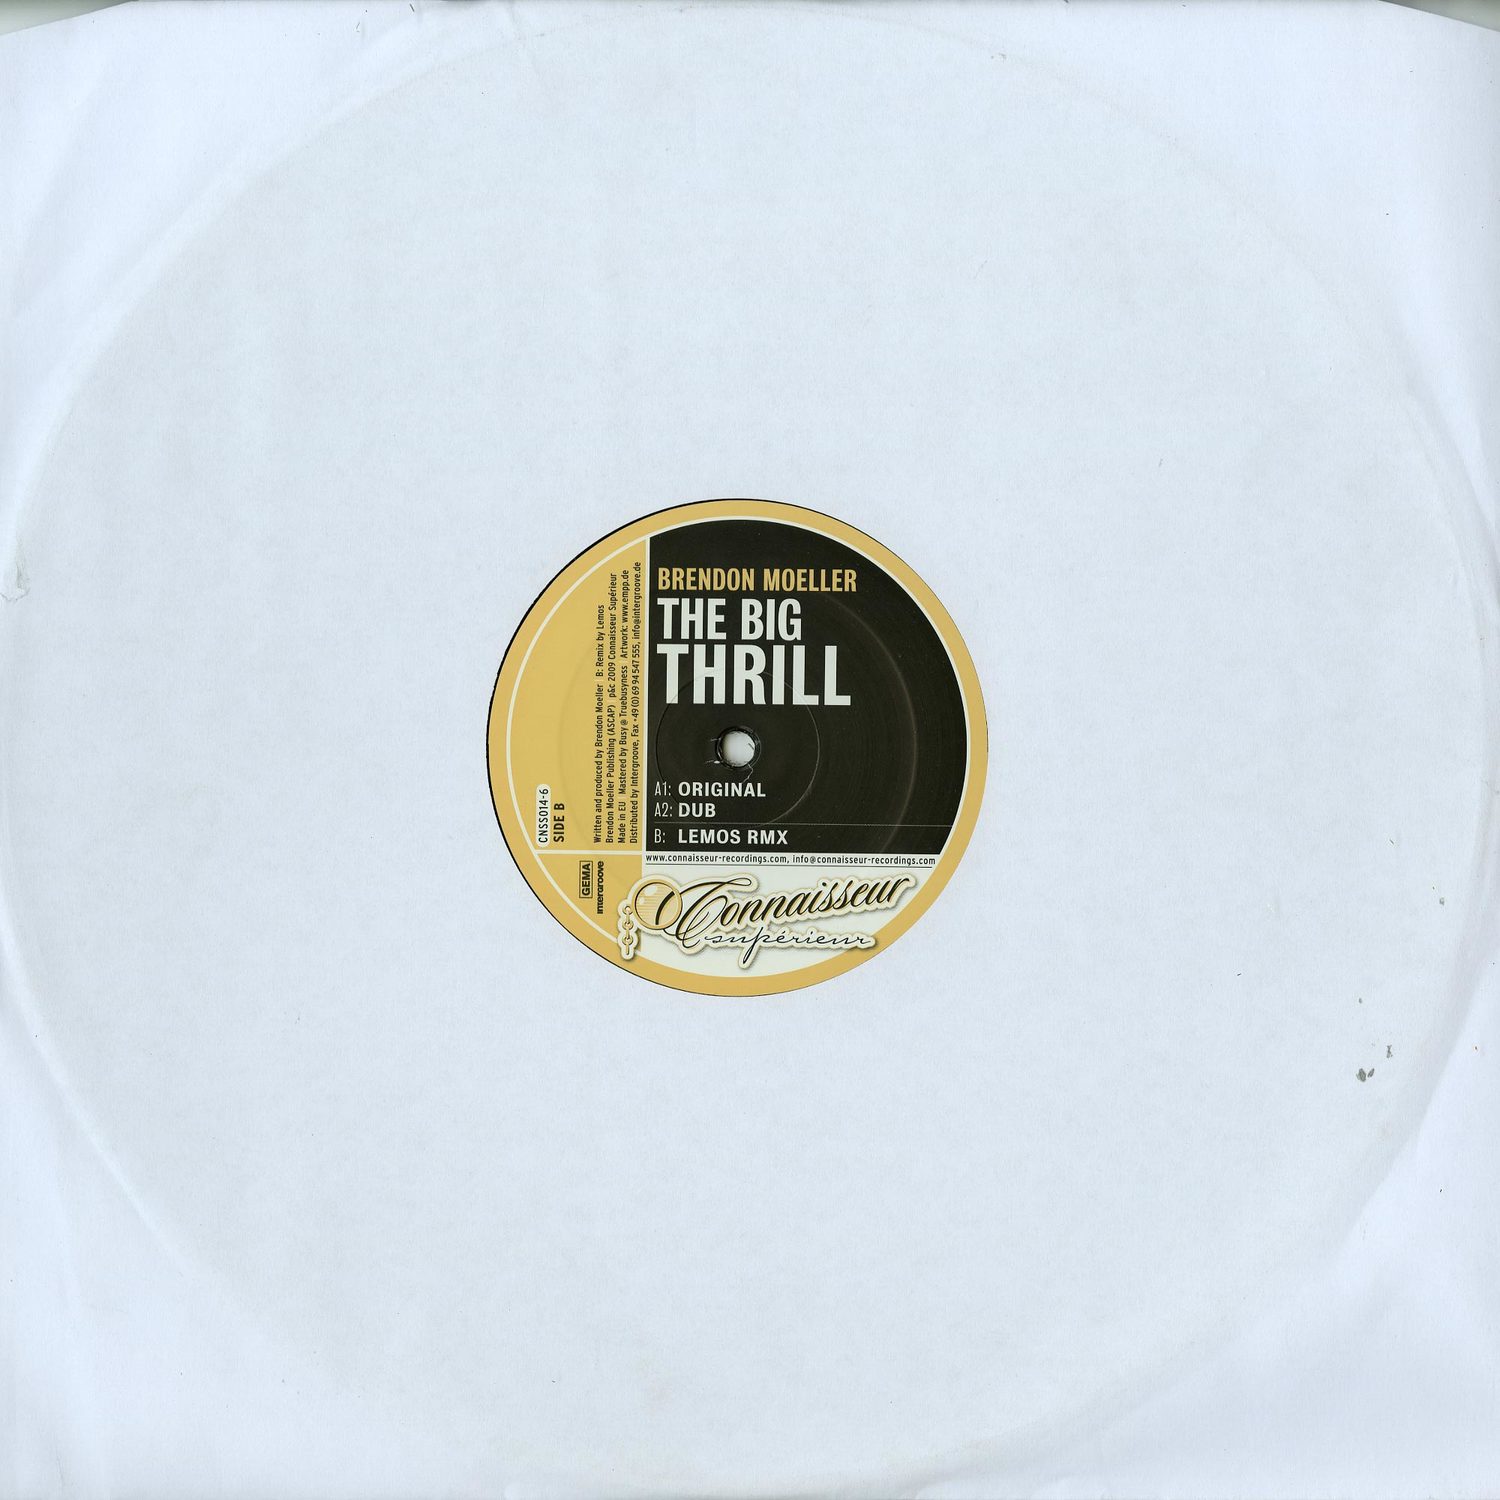 Brendon Moeller - THE BIG THRILL